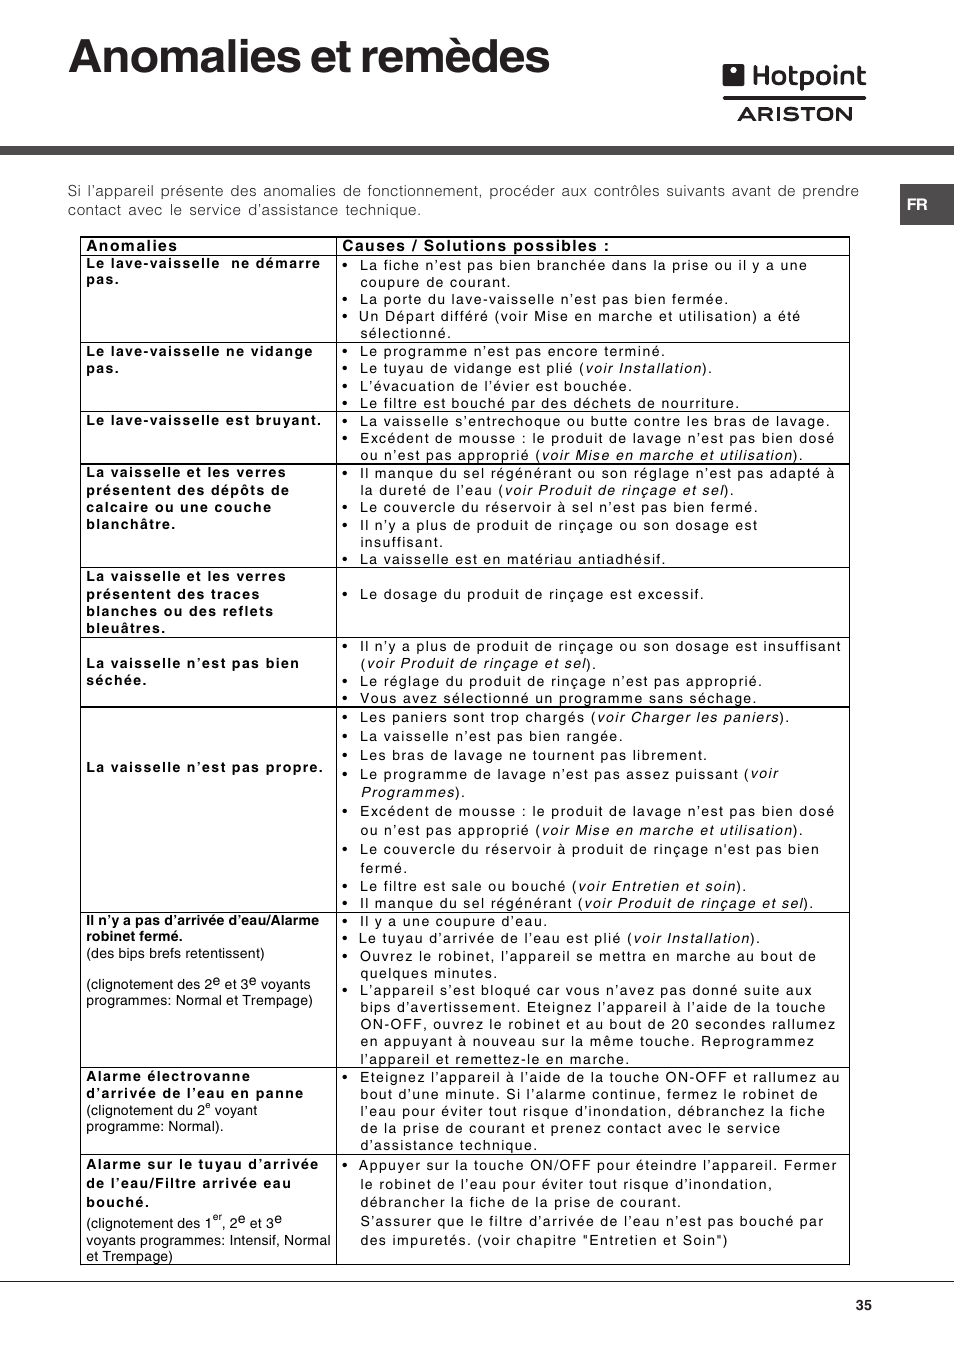 Anomalies et remèdes | Hotpoint Ariston LFT 216 User Manual | Page 35 / 84